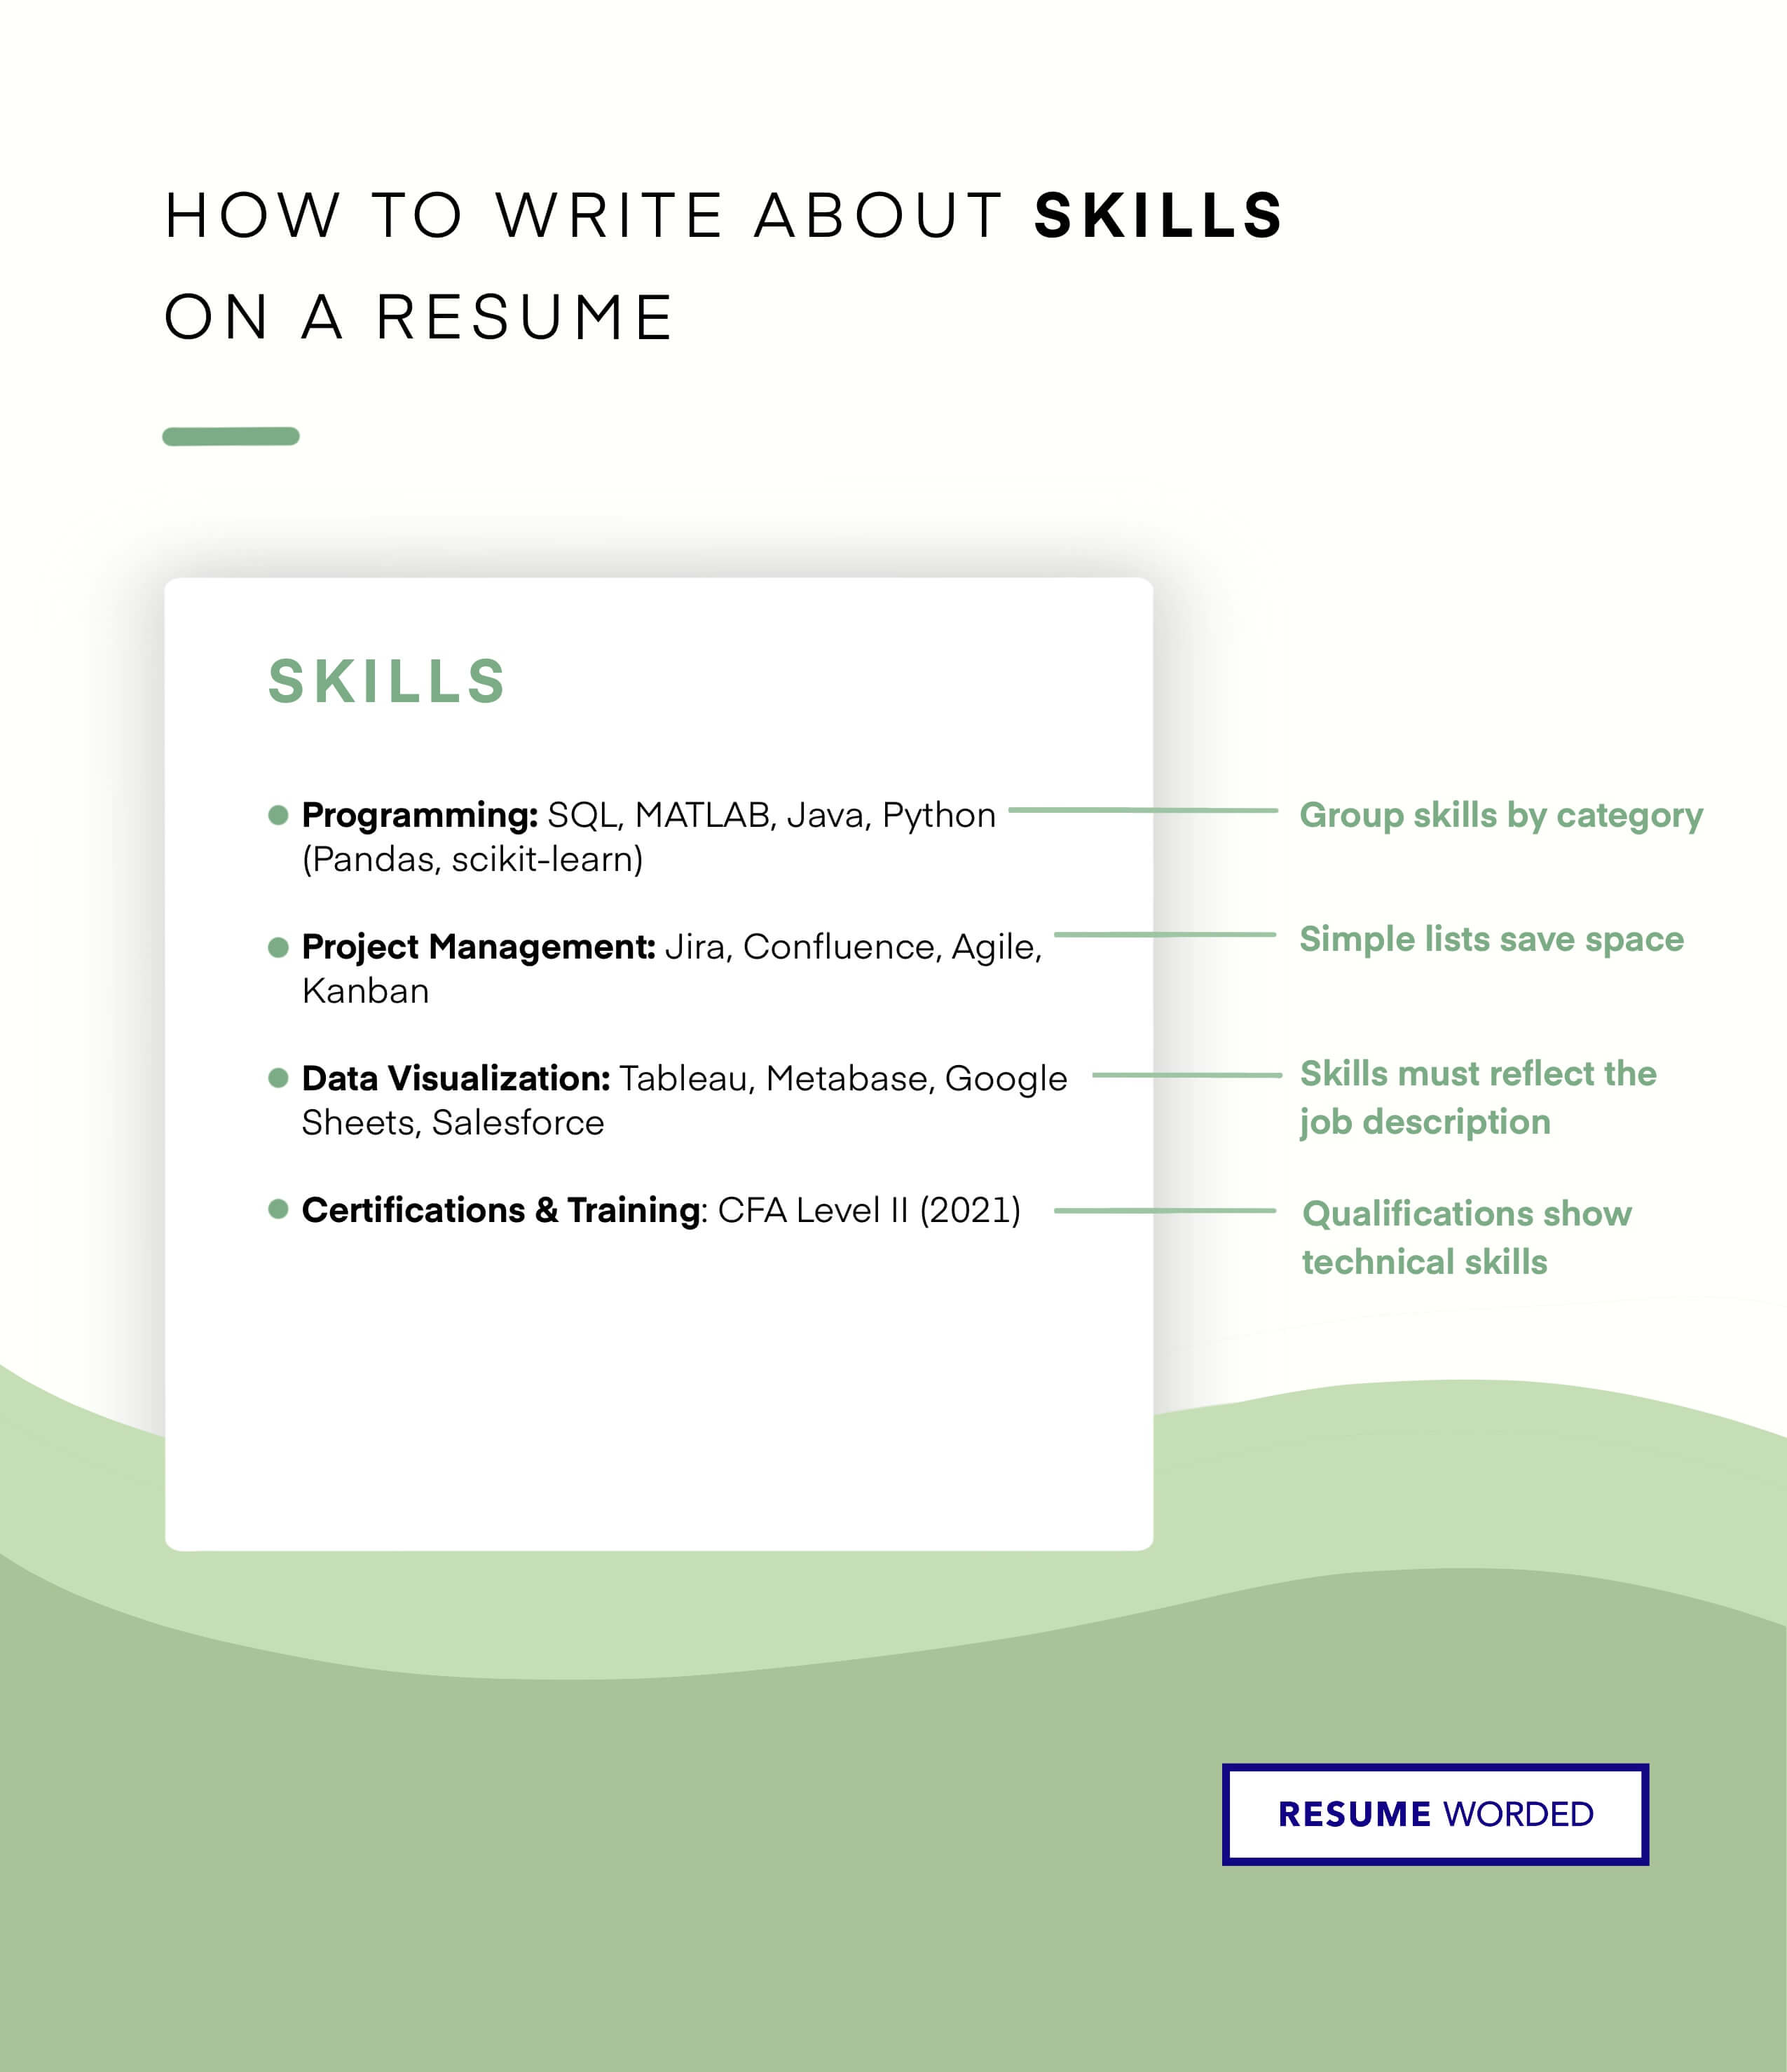 Show, Don't Tell - Showcase Your Skills - Scriptwriter CV